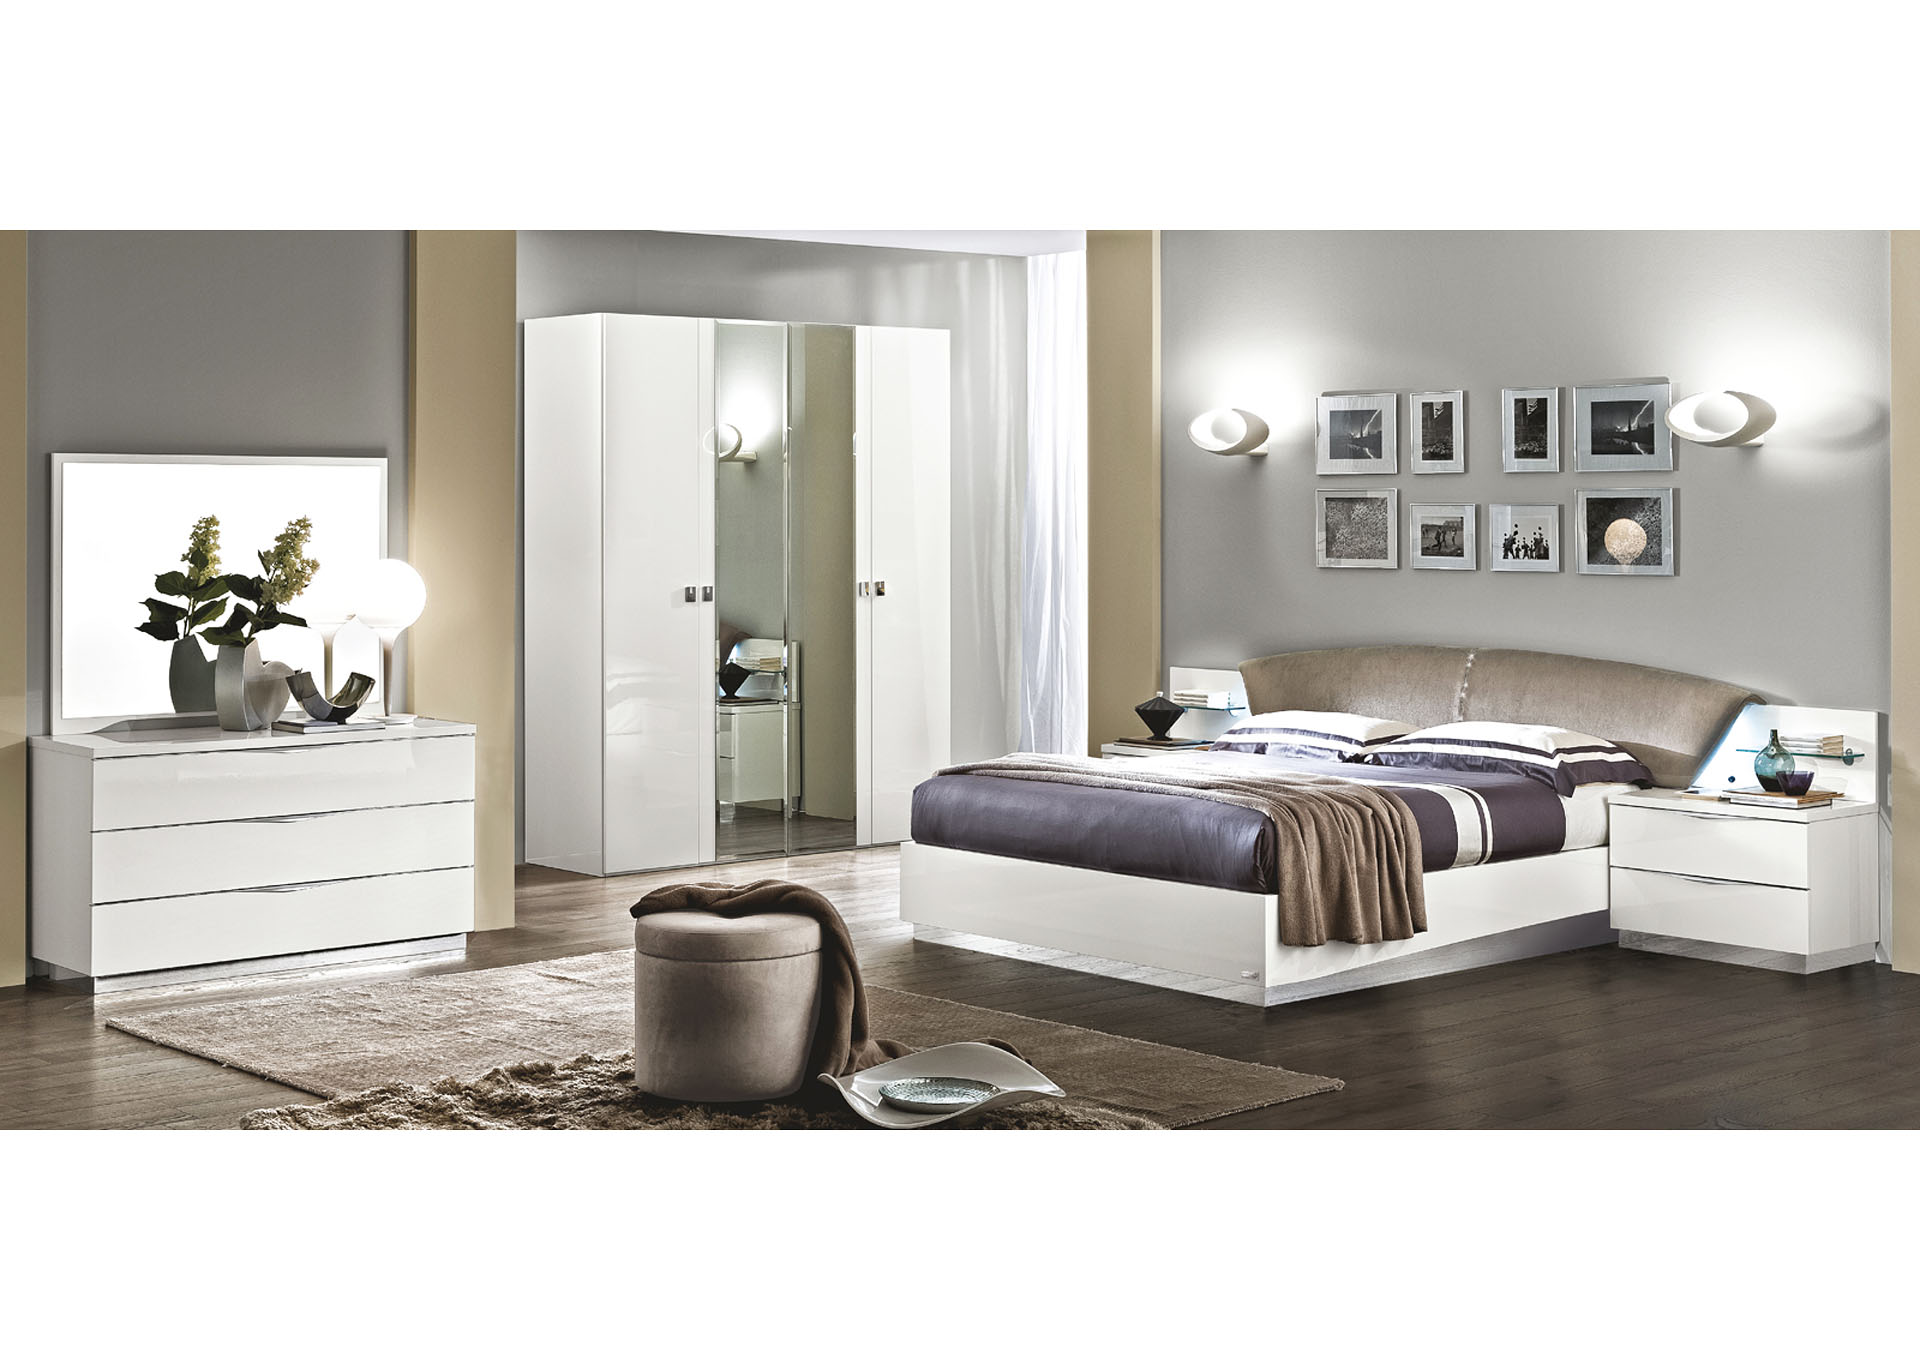 Onda Beige & White Double Dresser,ESF Wholesale Furniture